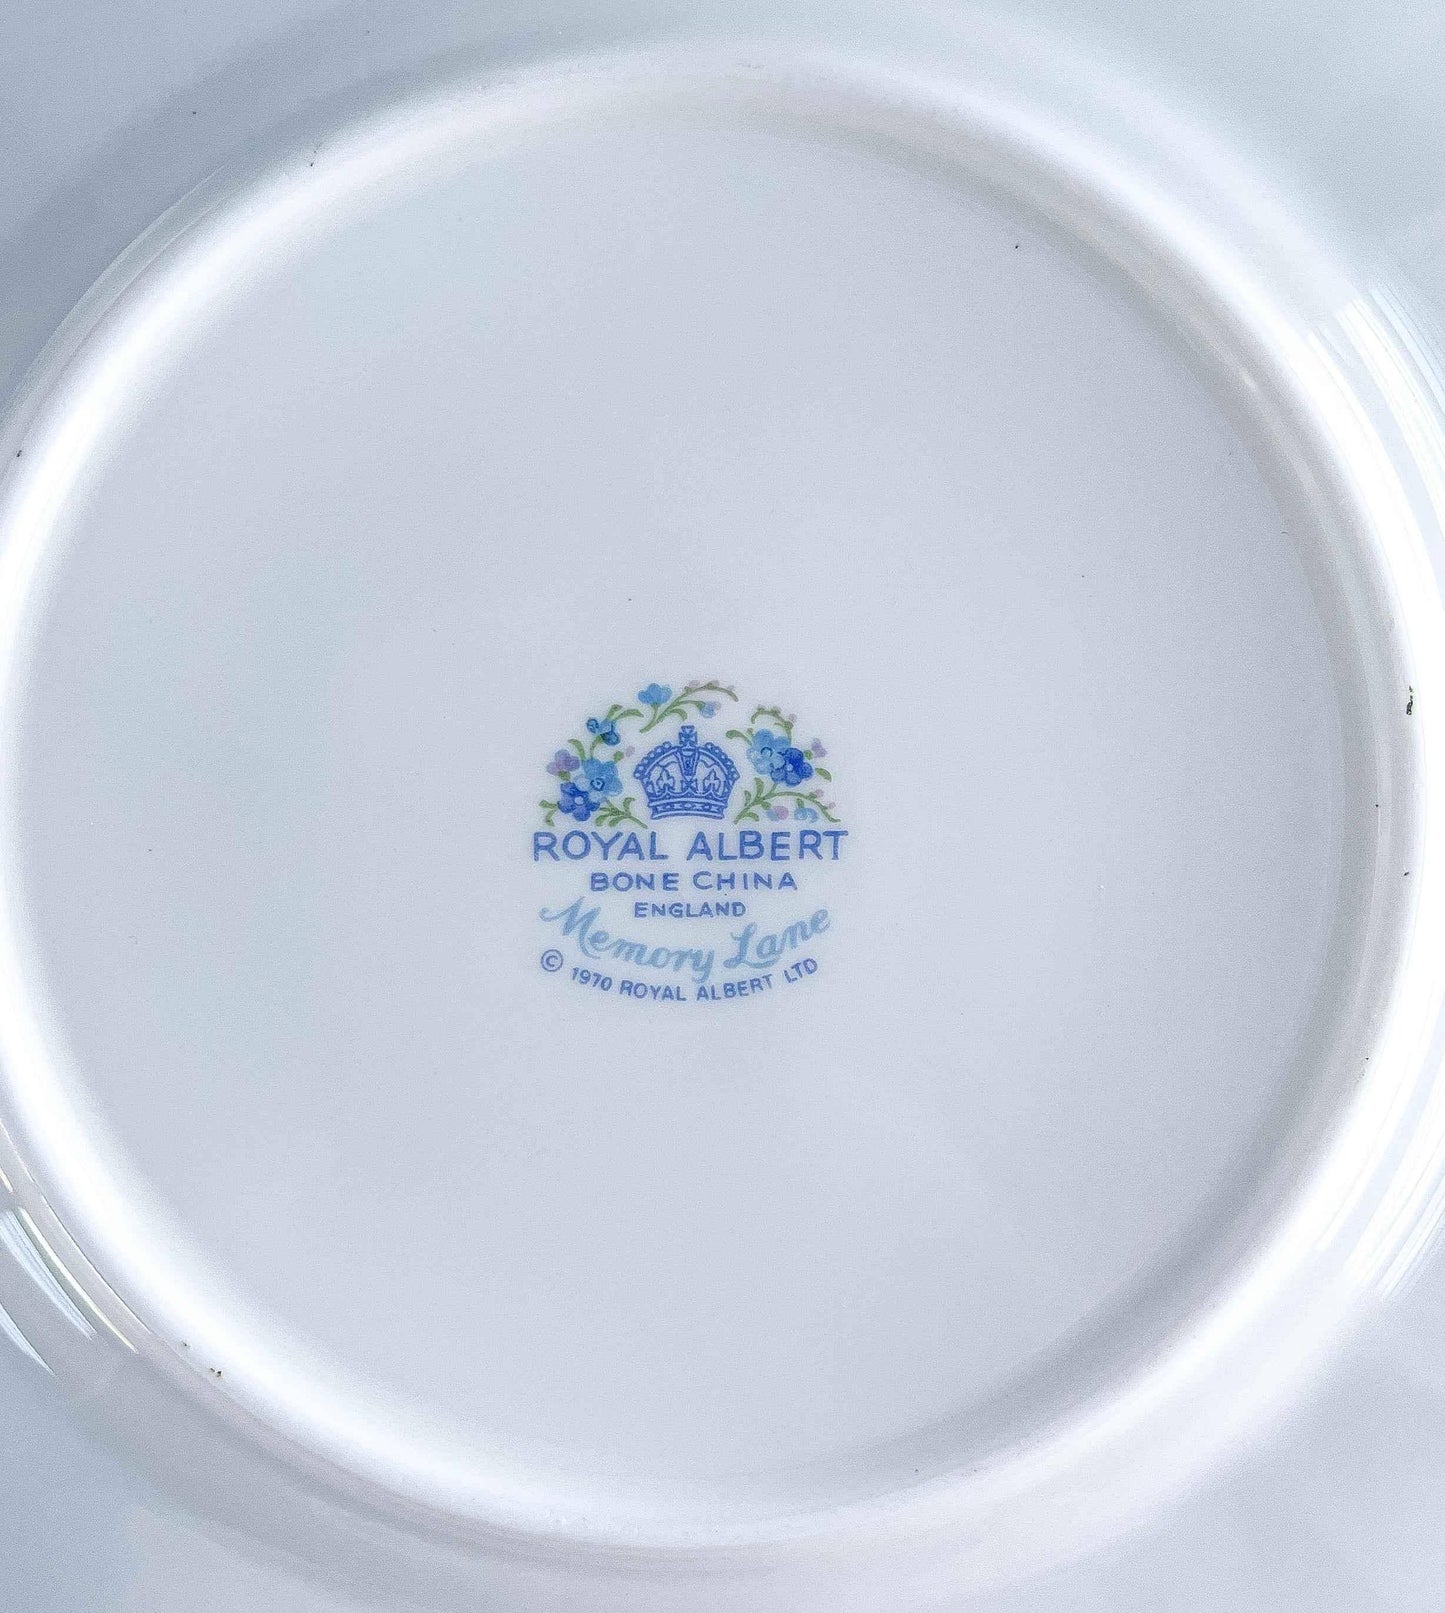 Royal Albert Dinner Plate - 'Memory Lane' Collection - SOSC Home